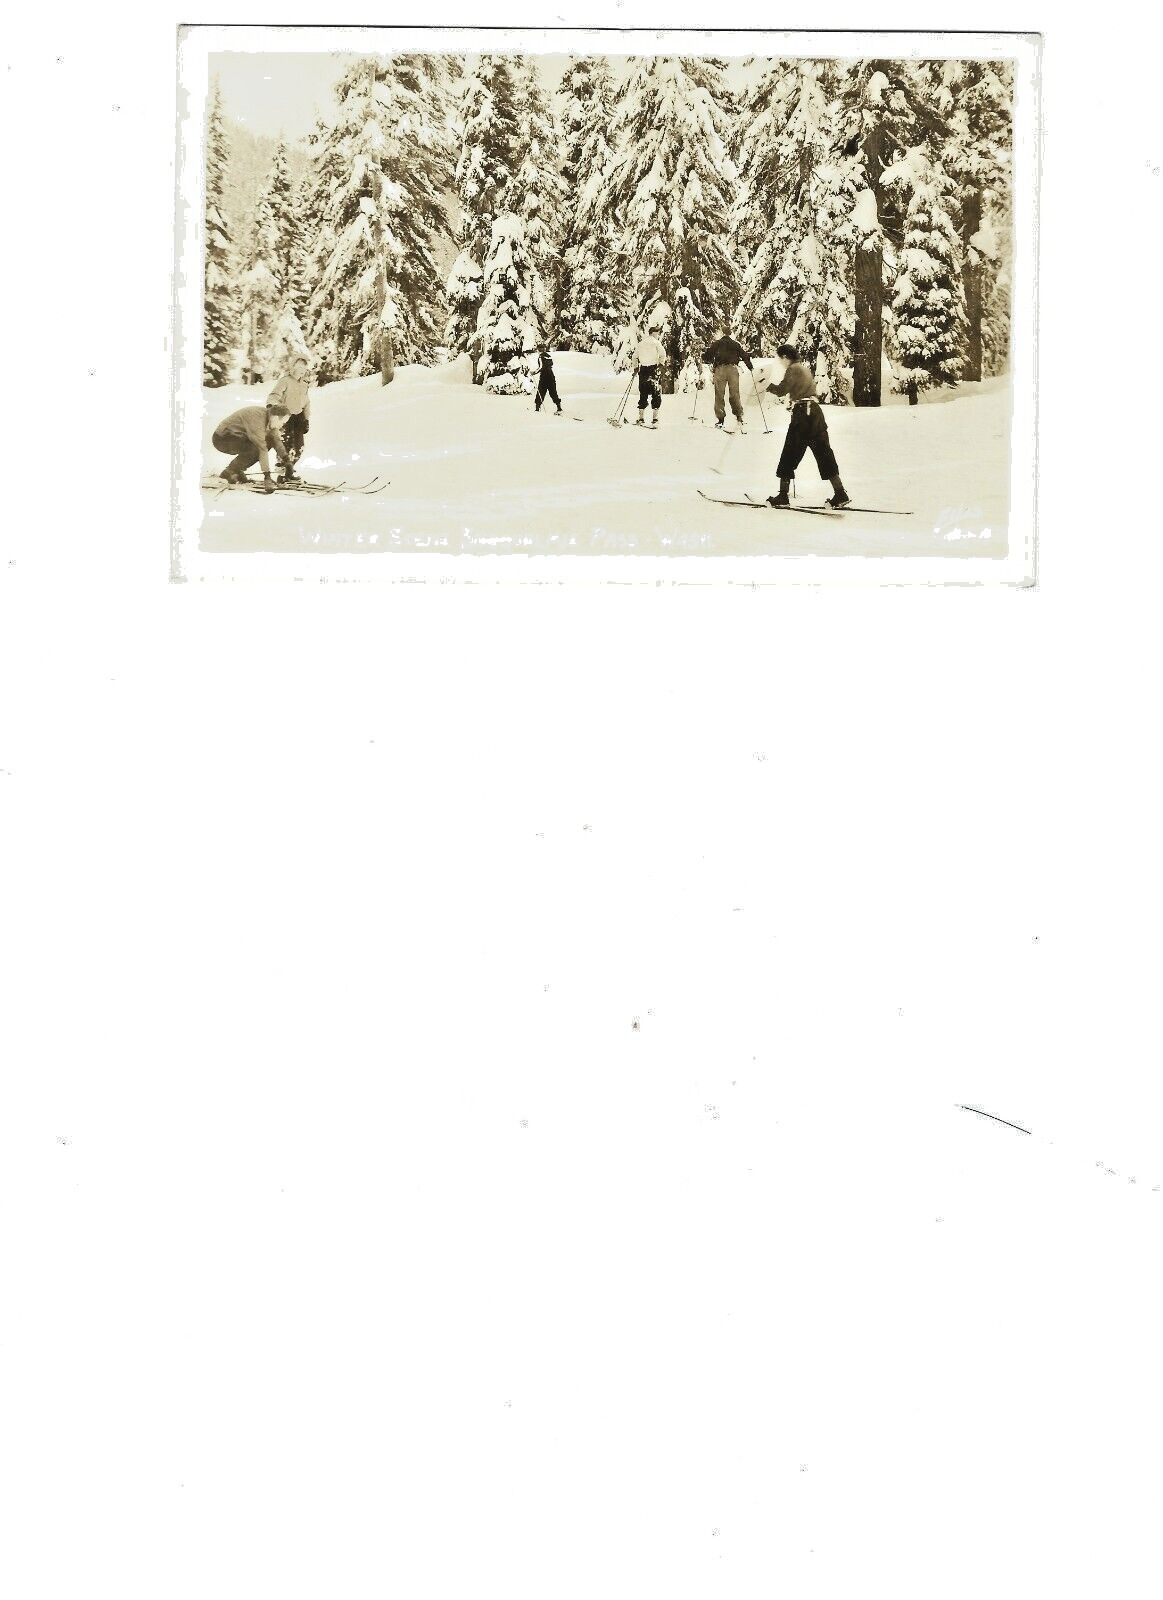 Vintage Real Photo Postcard - Snoqualmie Pass~ Washington State 1940's?